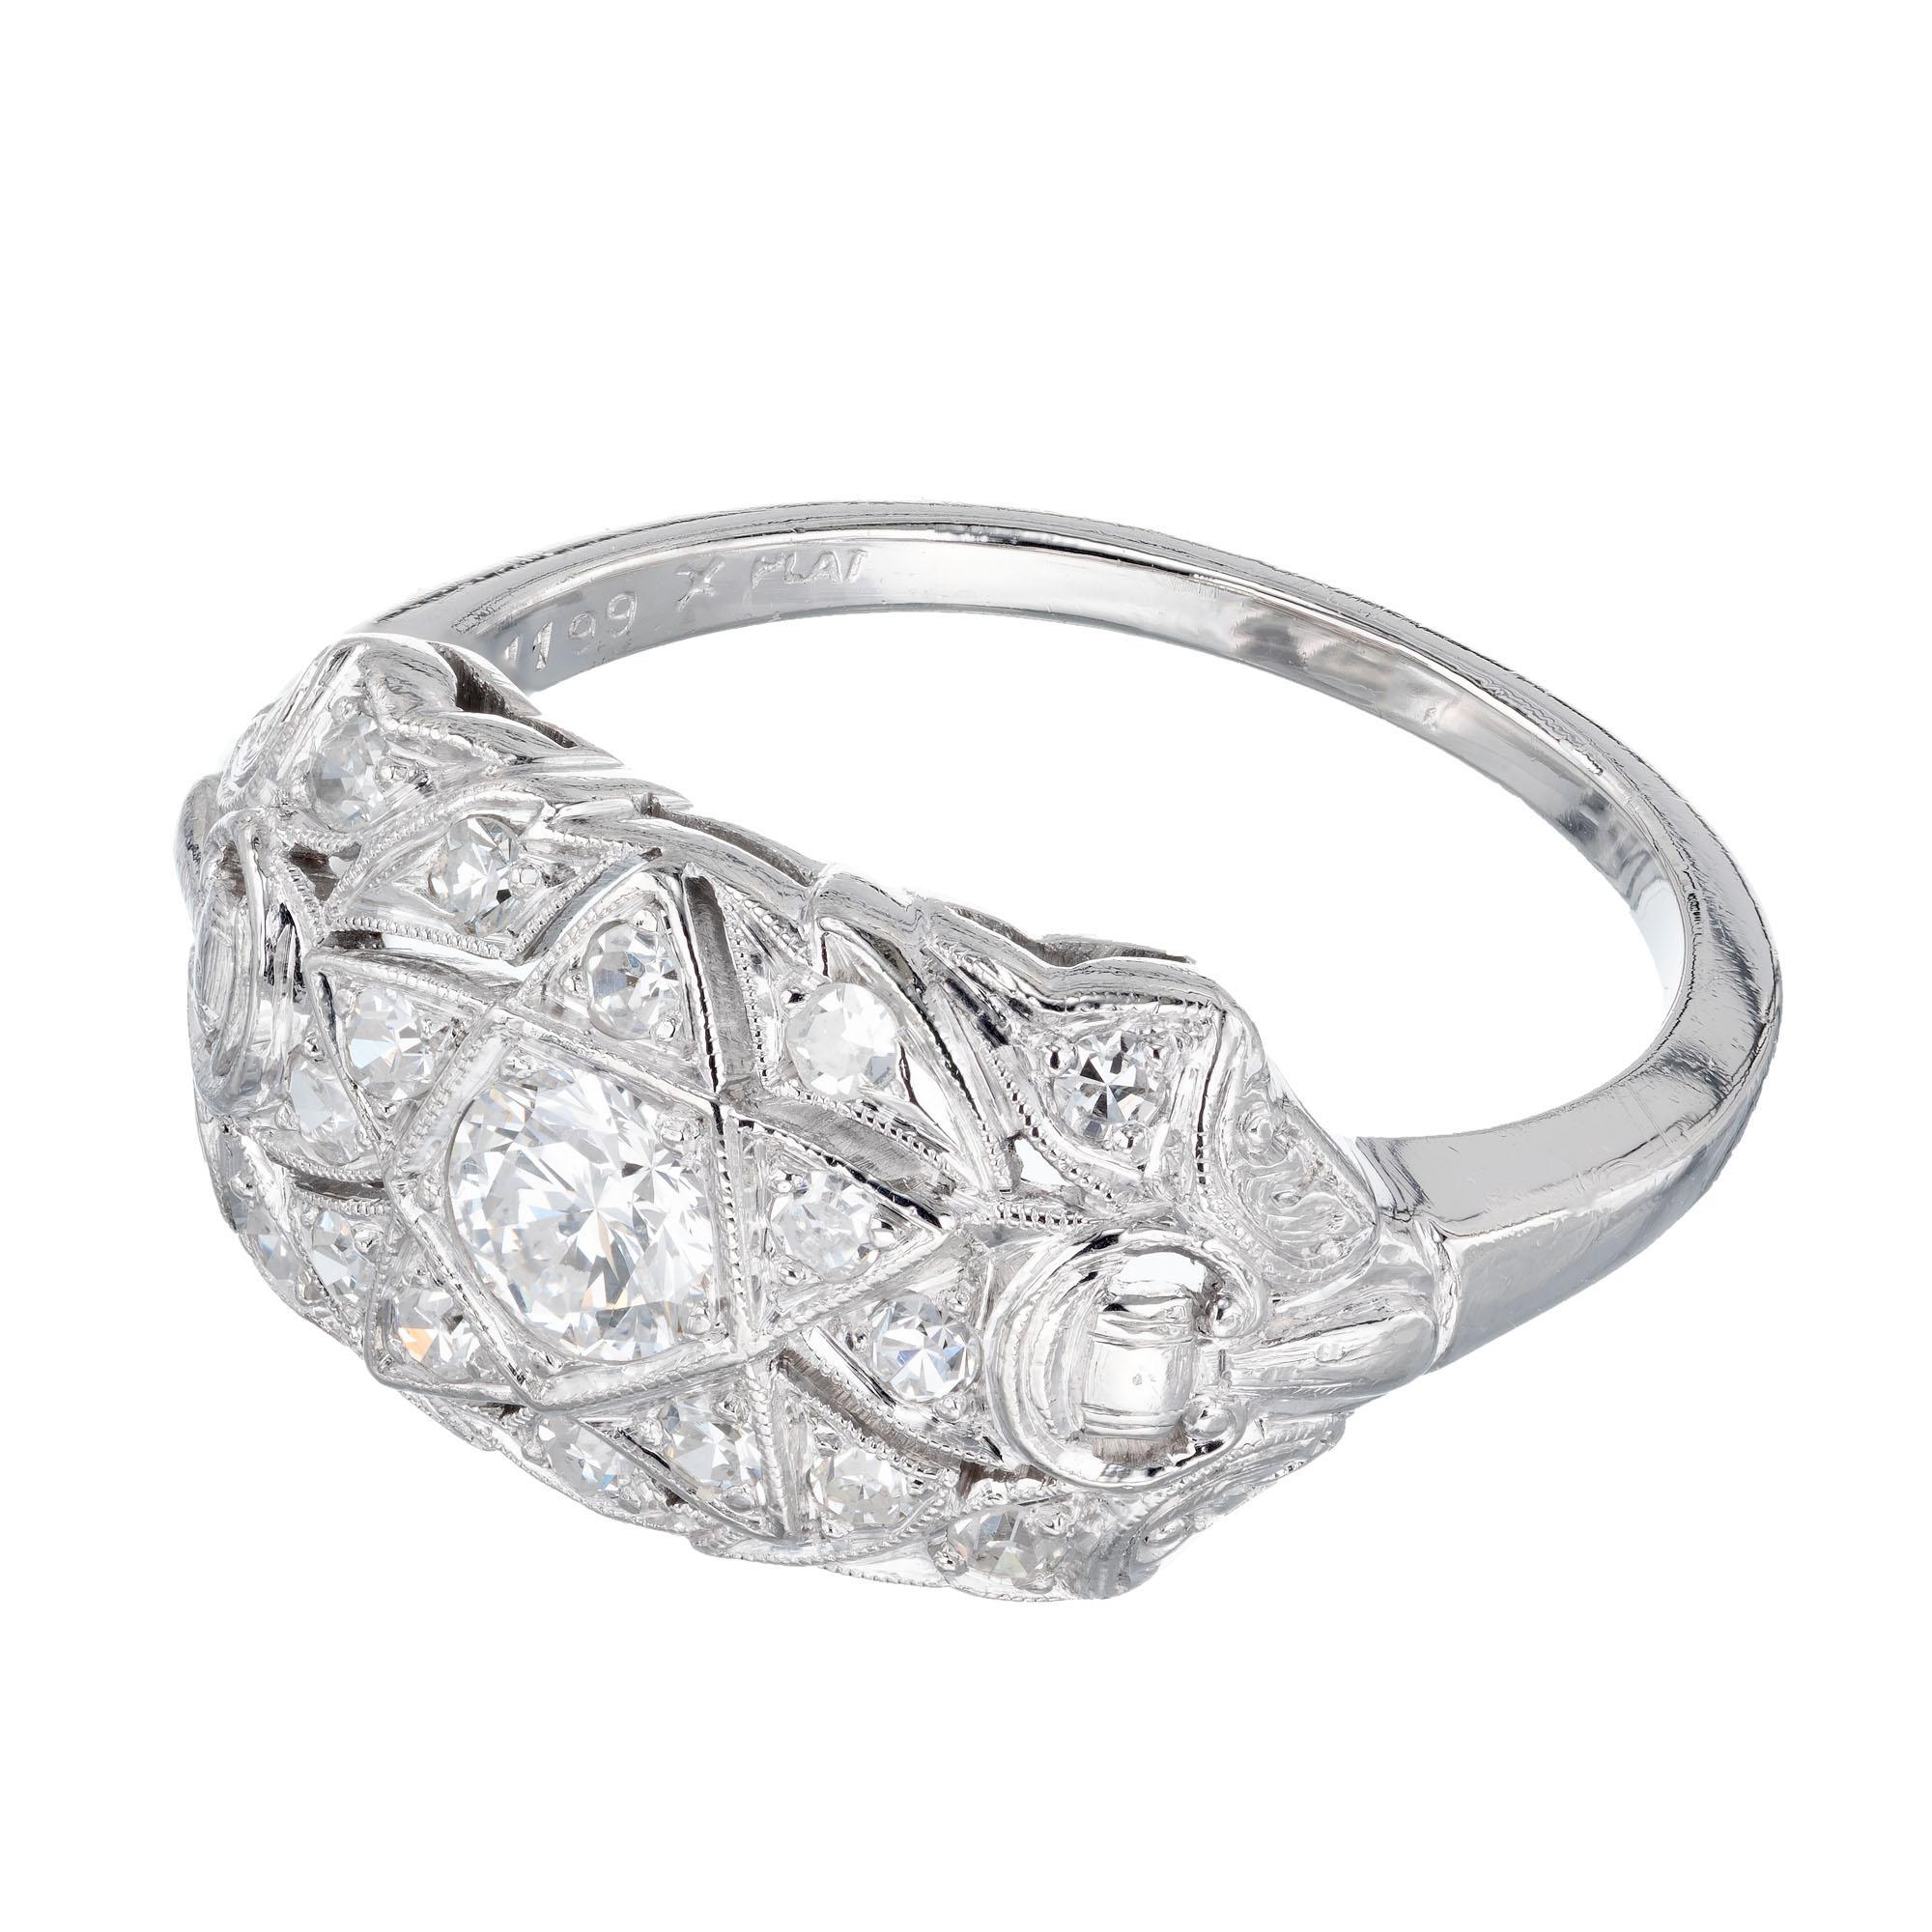 58 carat diamond ring